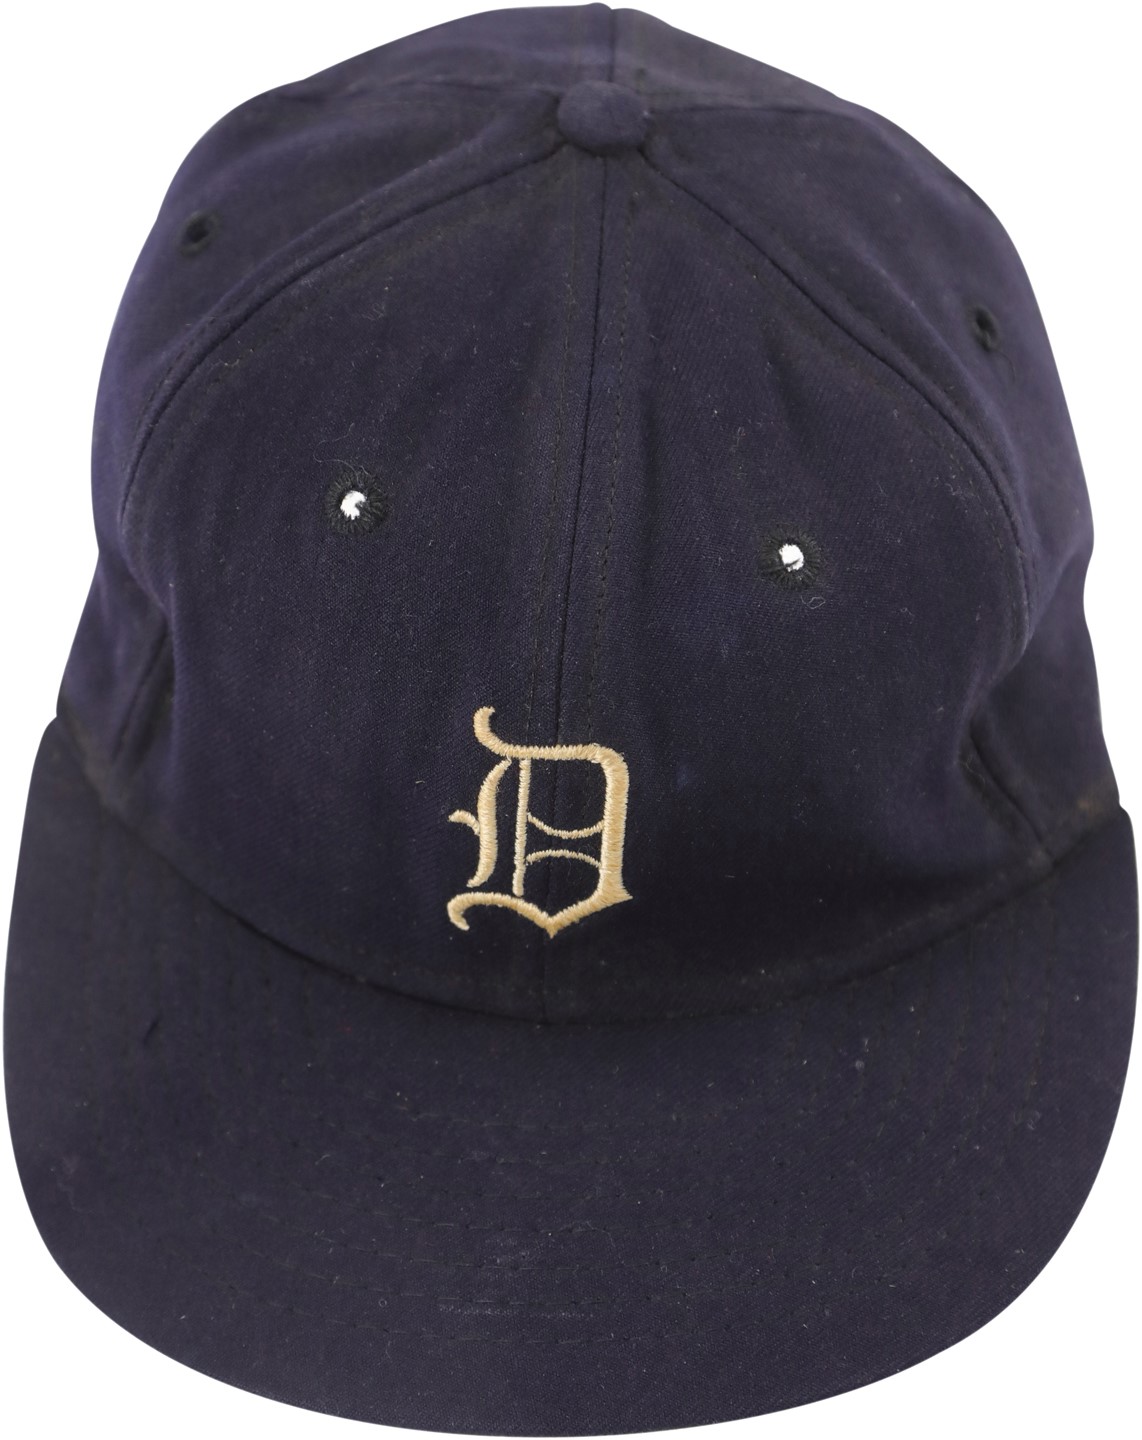 Baseball Equipment - 1960s Al Kaline Detroit Tigers Game Used Hat